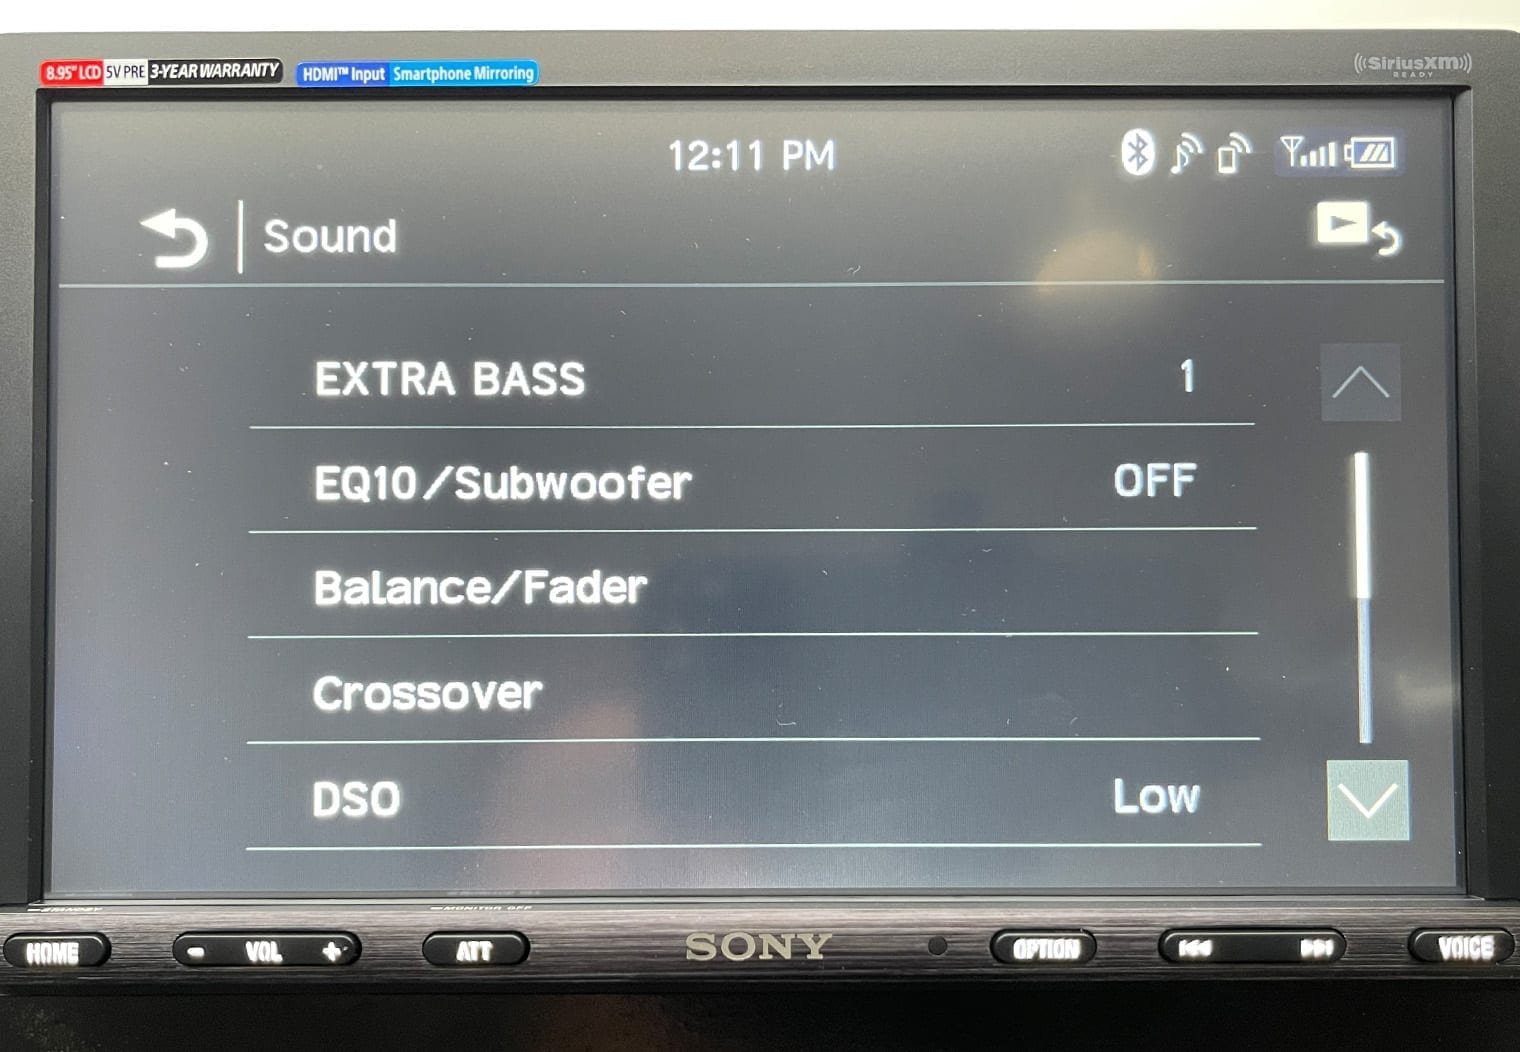 Sony XAV-AX8100 sound settings on screen